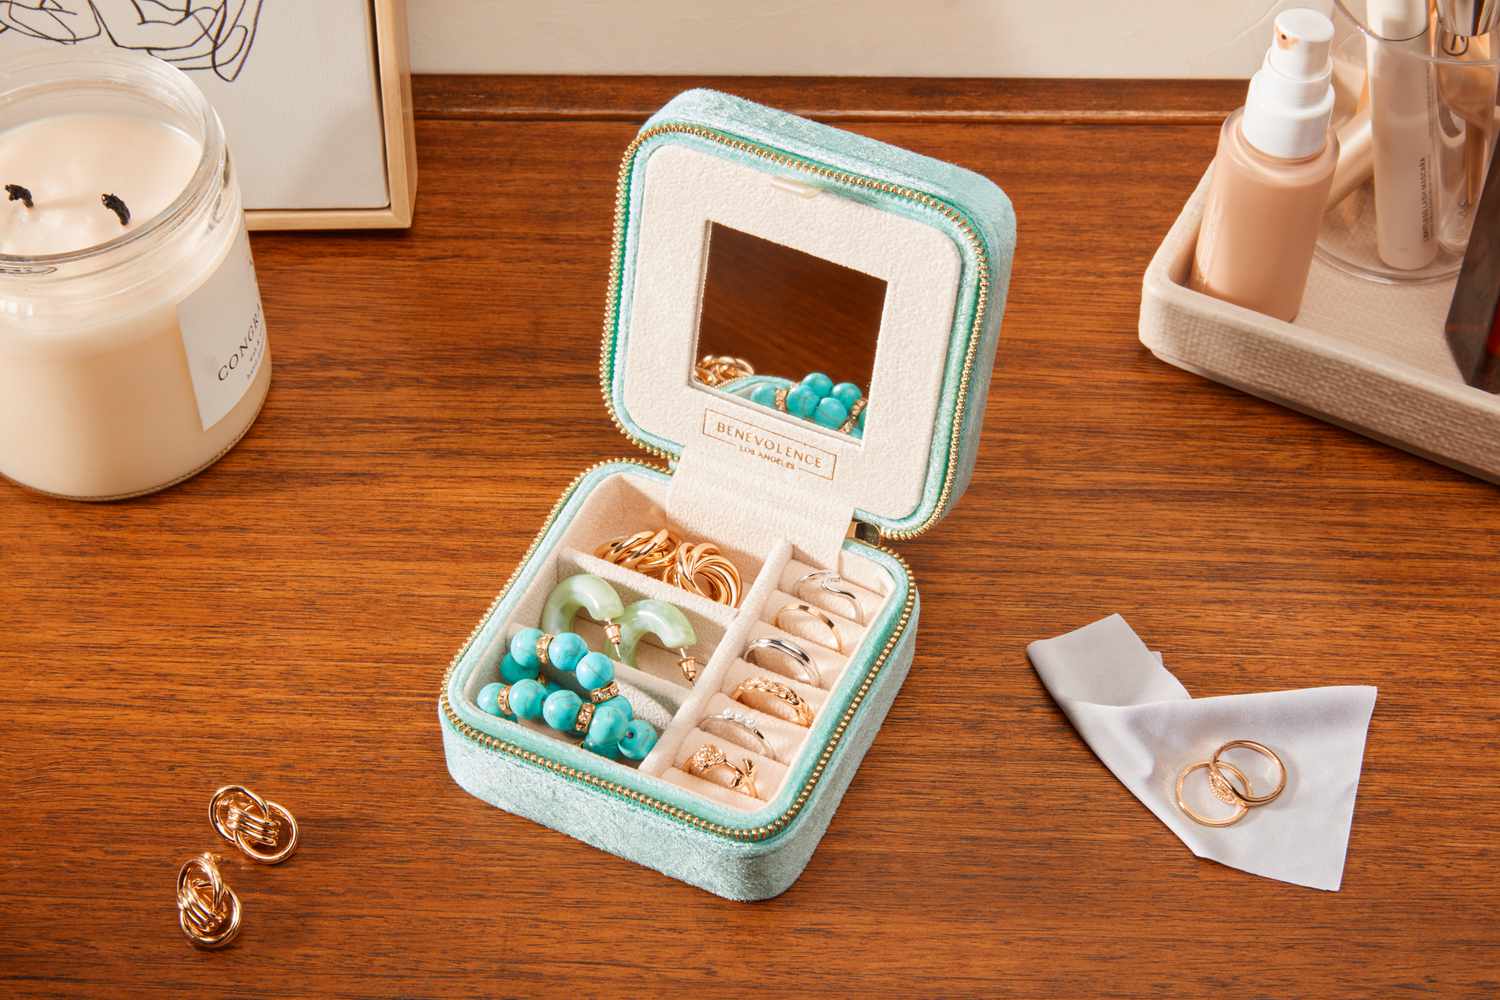 The Benevolence Plush Velvet Travel Jewelry Box Organizer filled with jewelry